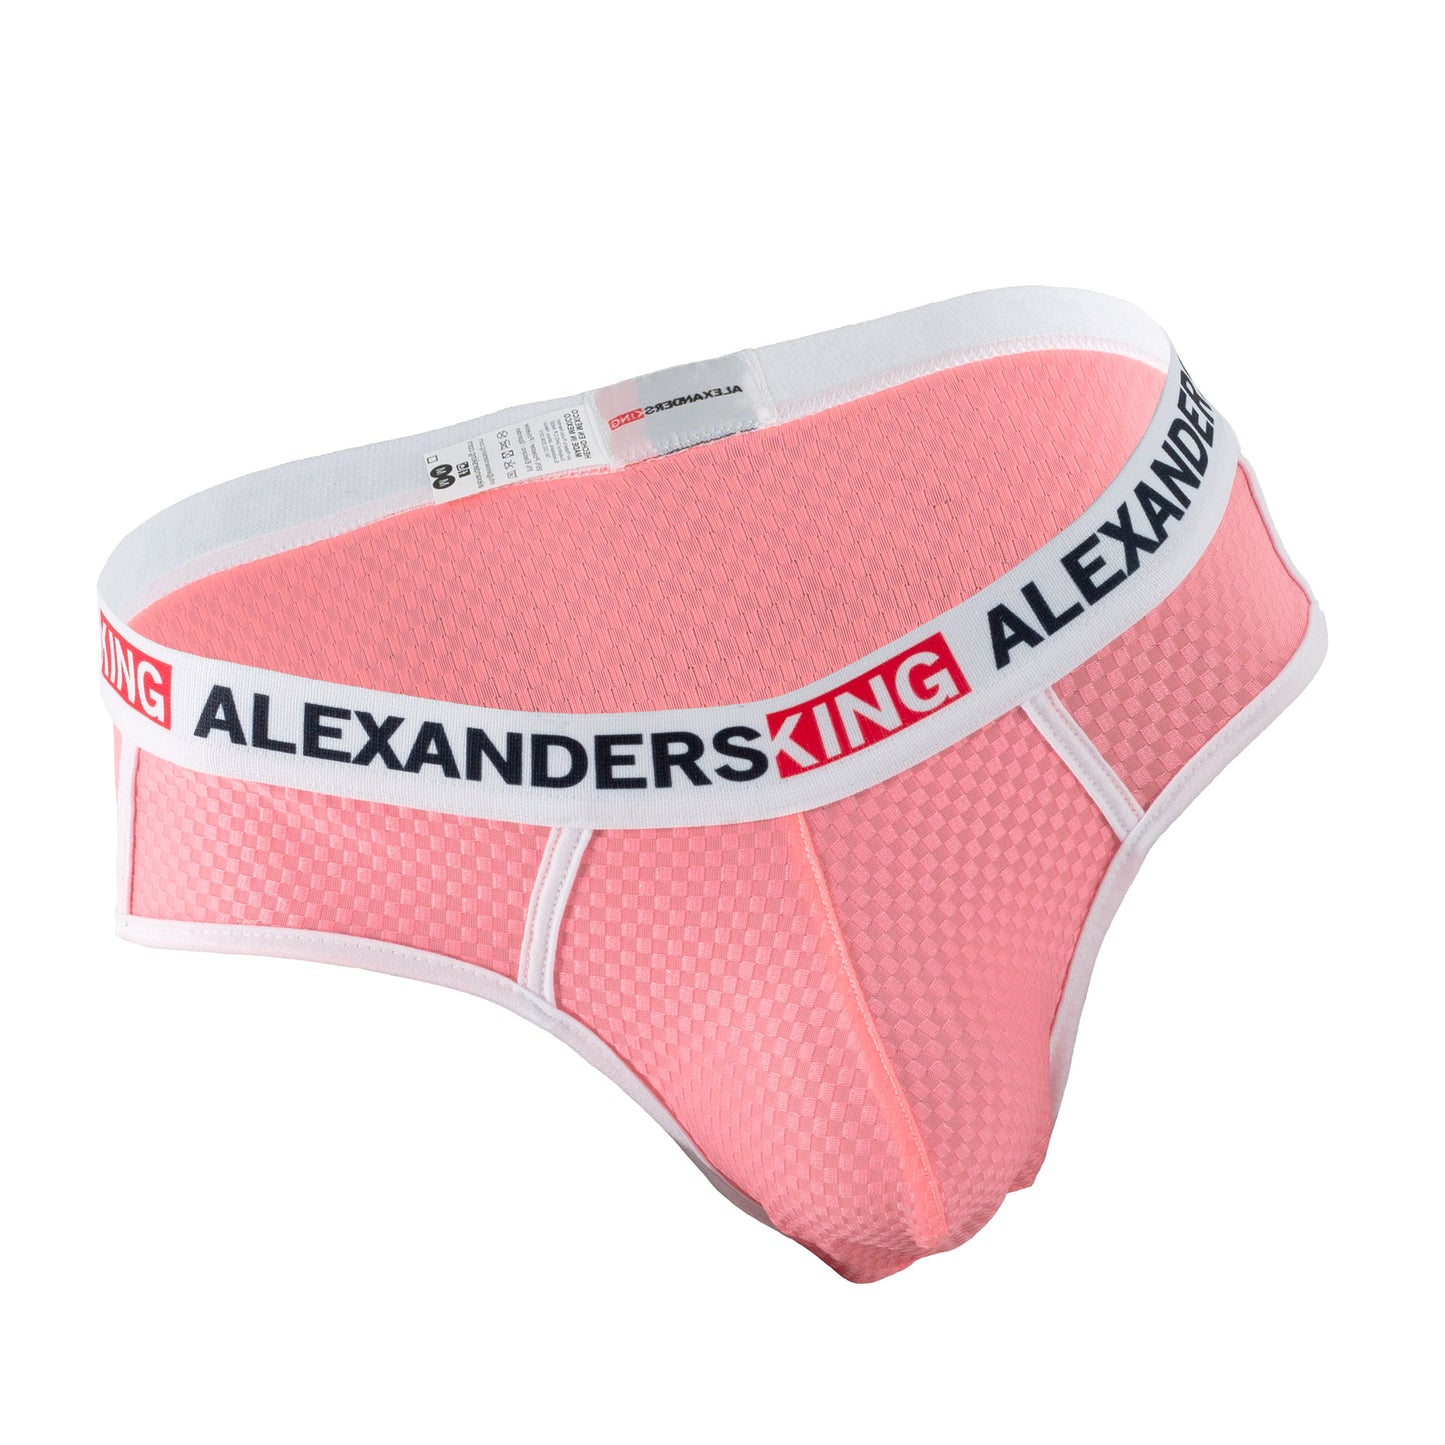 TP0033 Brief Pink Neon Unwet Alexanders King